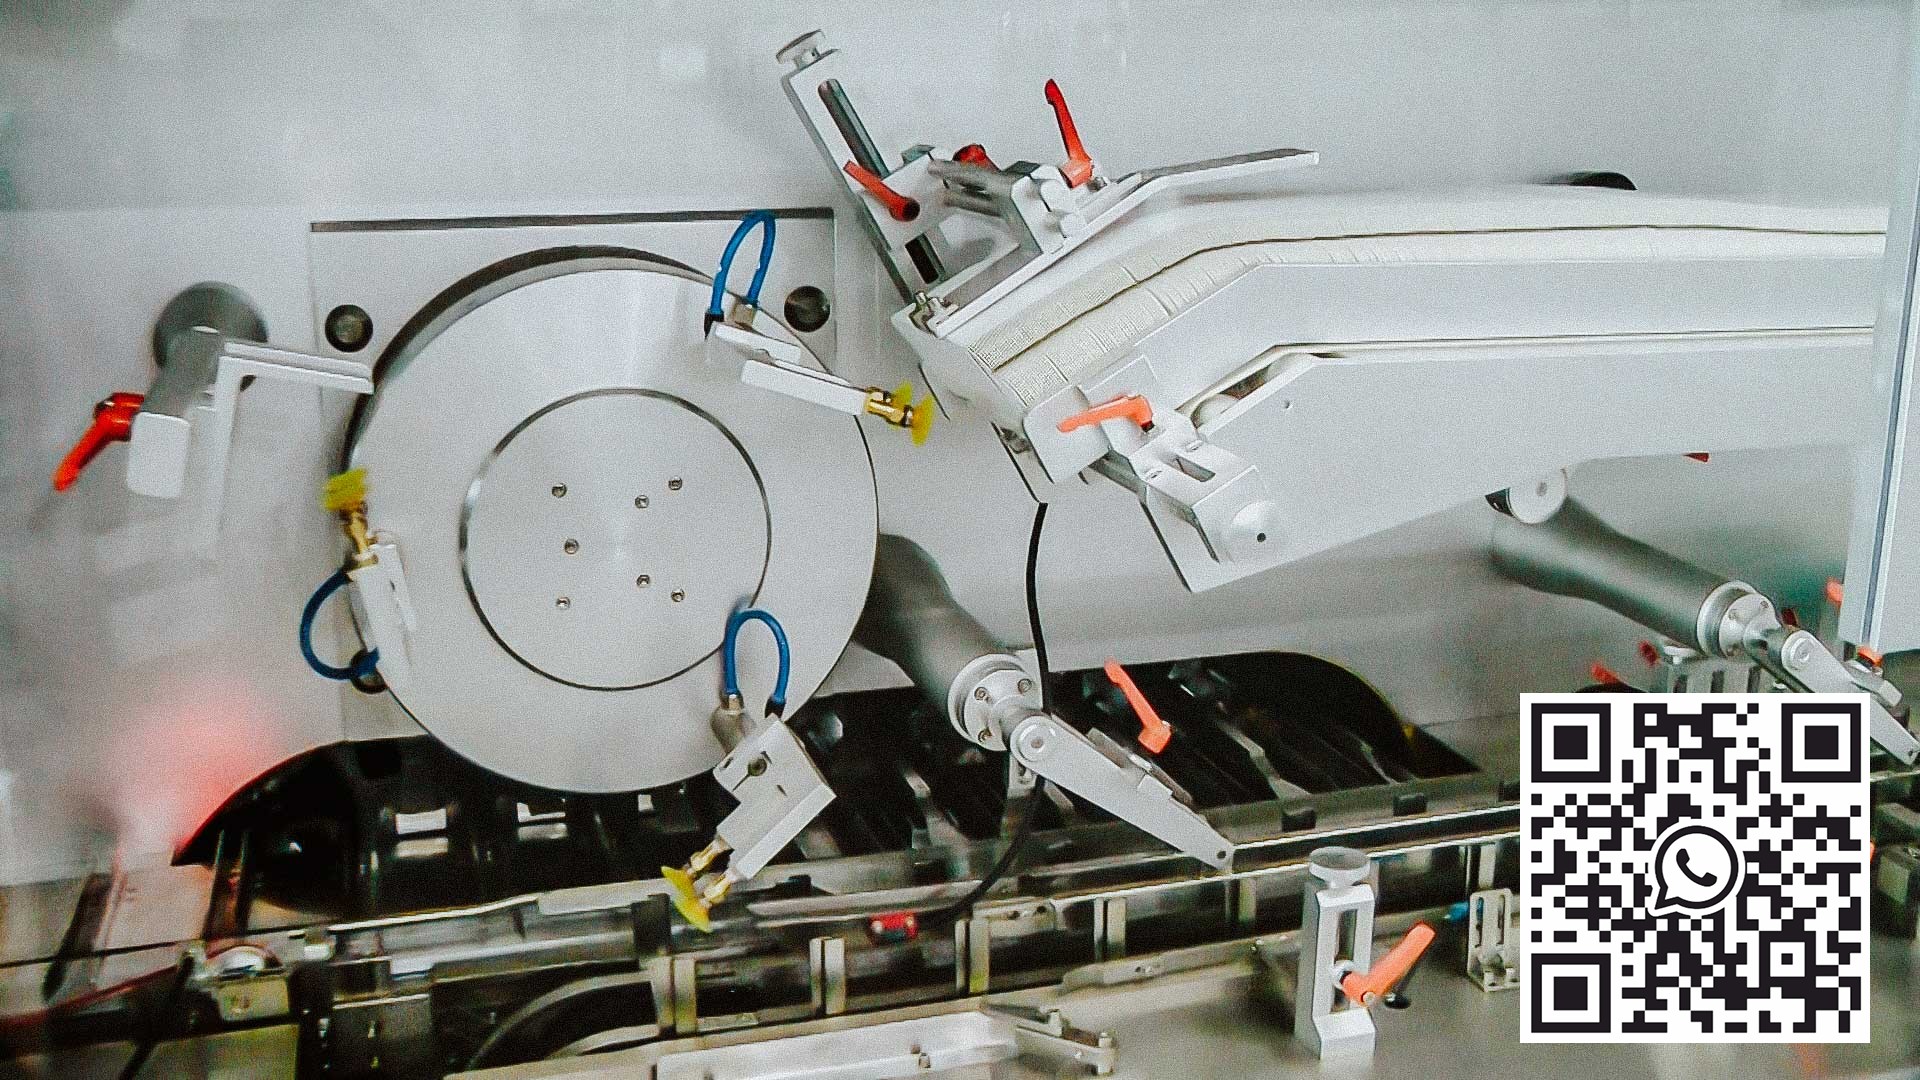 Peralatan karton blister otomatis berkecepatan tinggi untuk mengemas lepuh dalam kotak